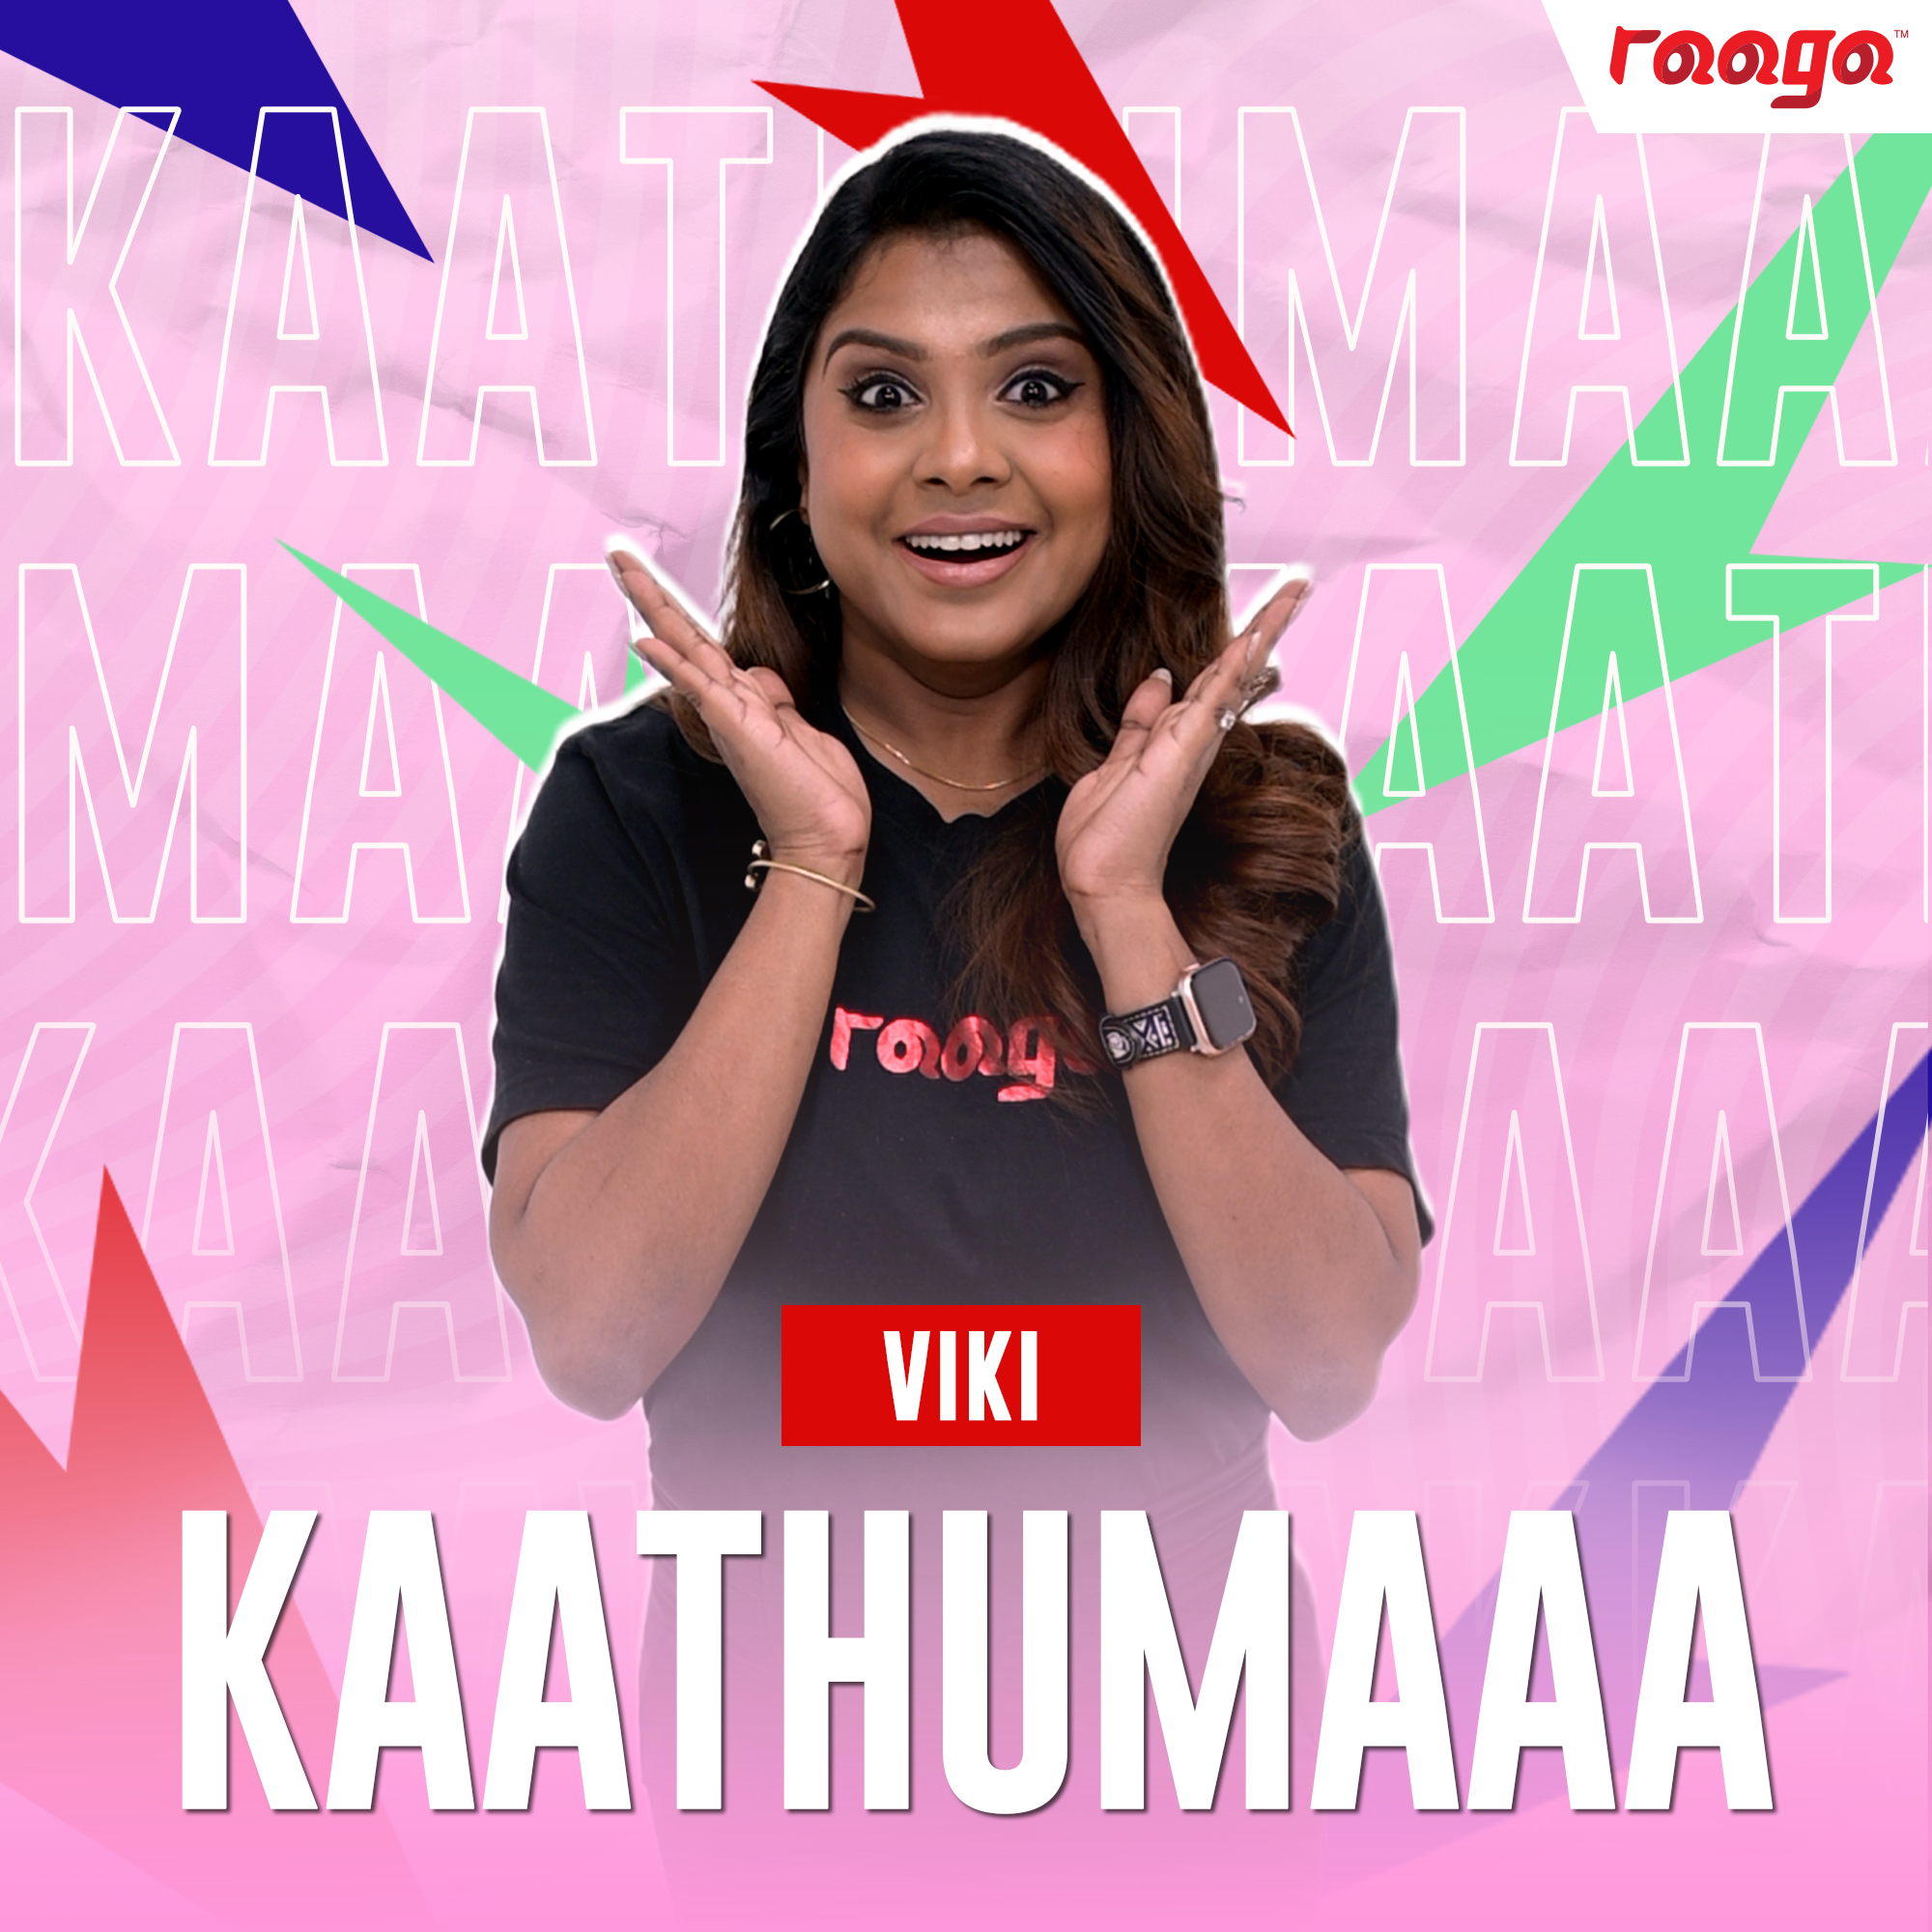 Kaathumaa - Radio Station [TM]